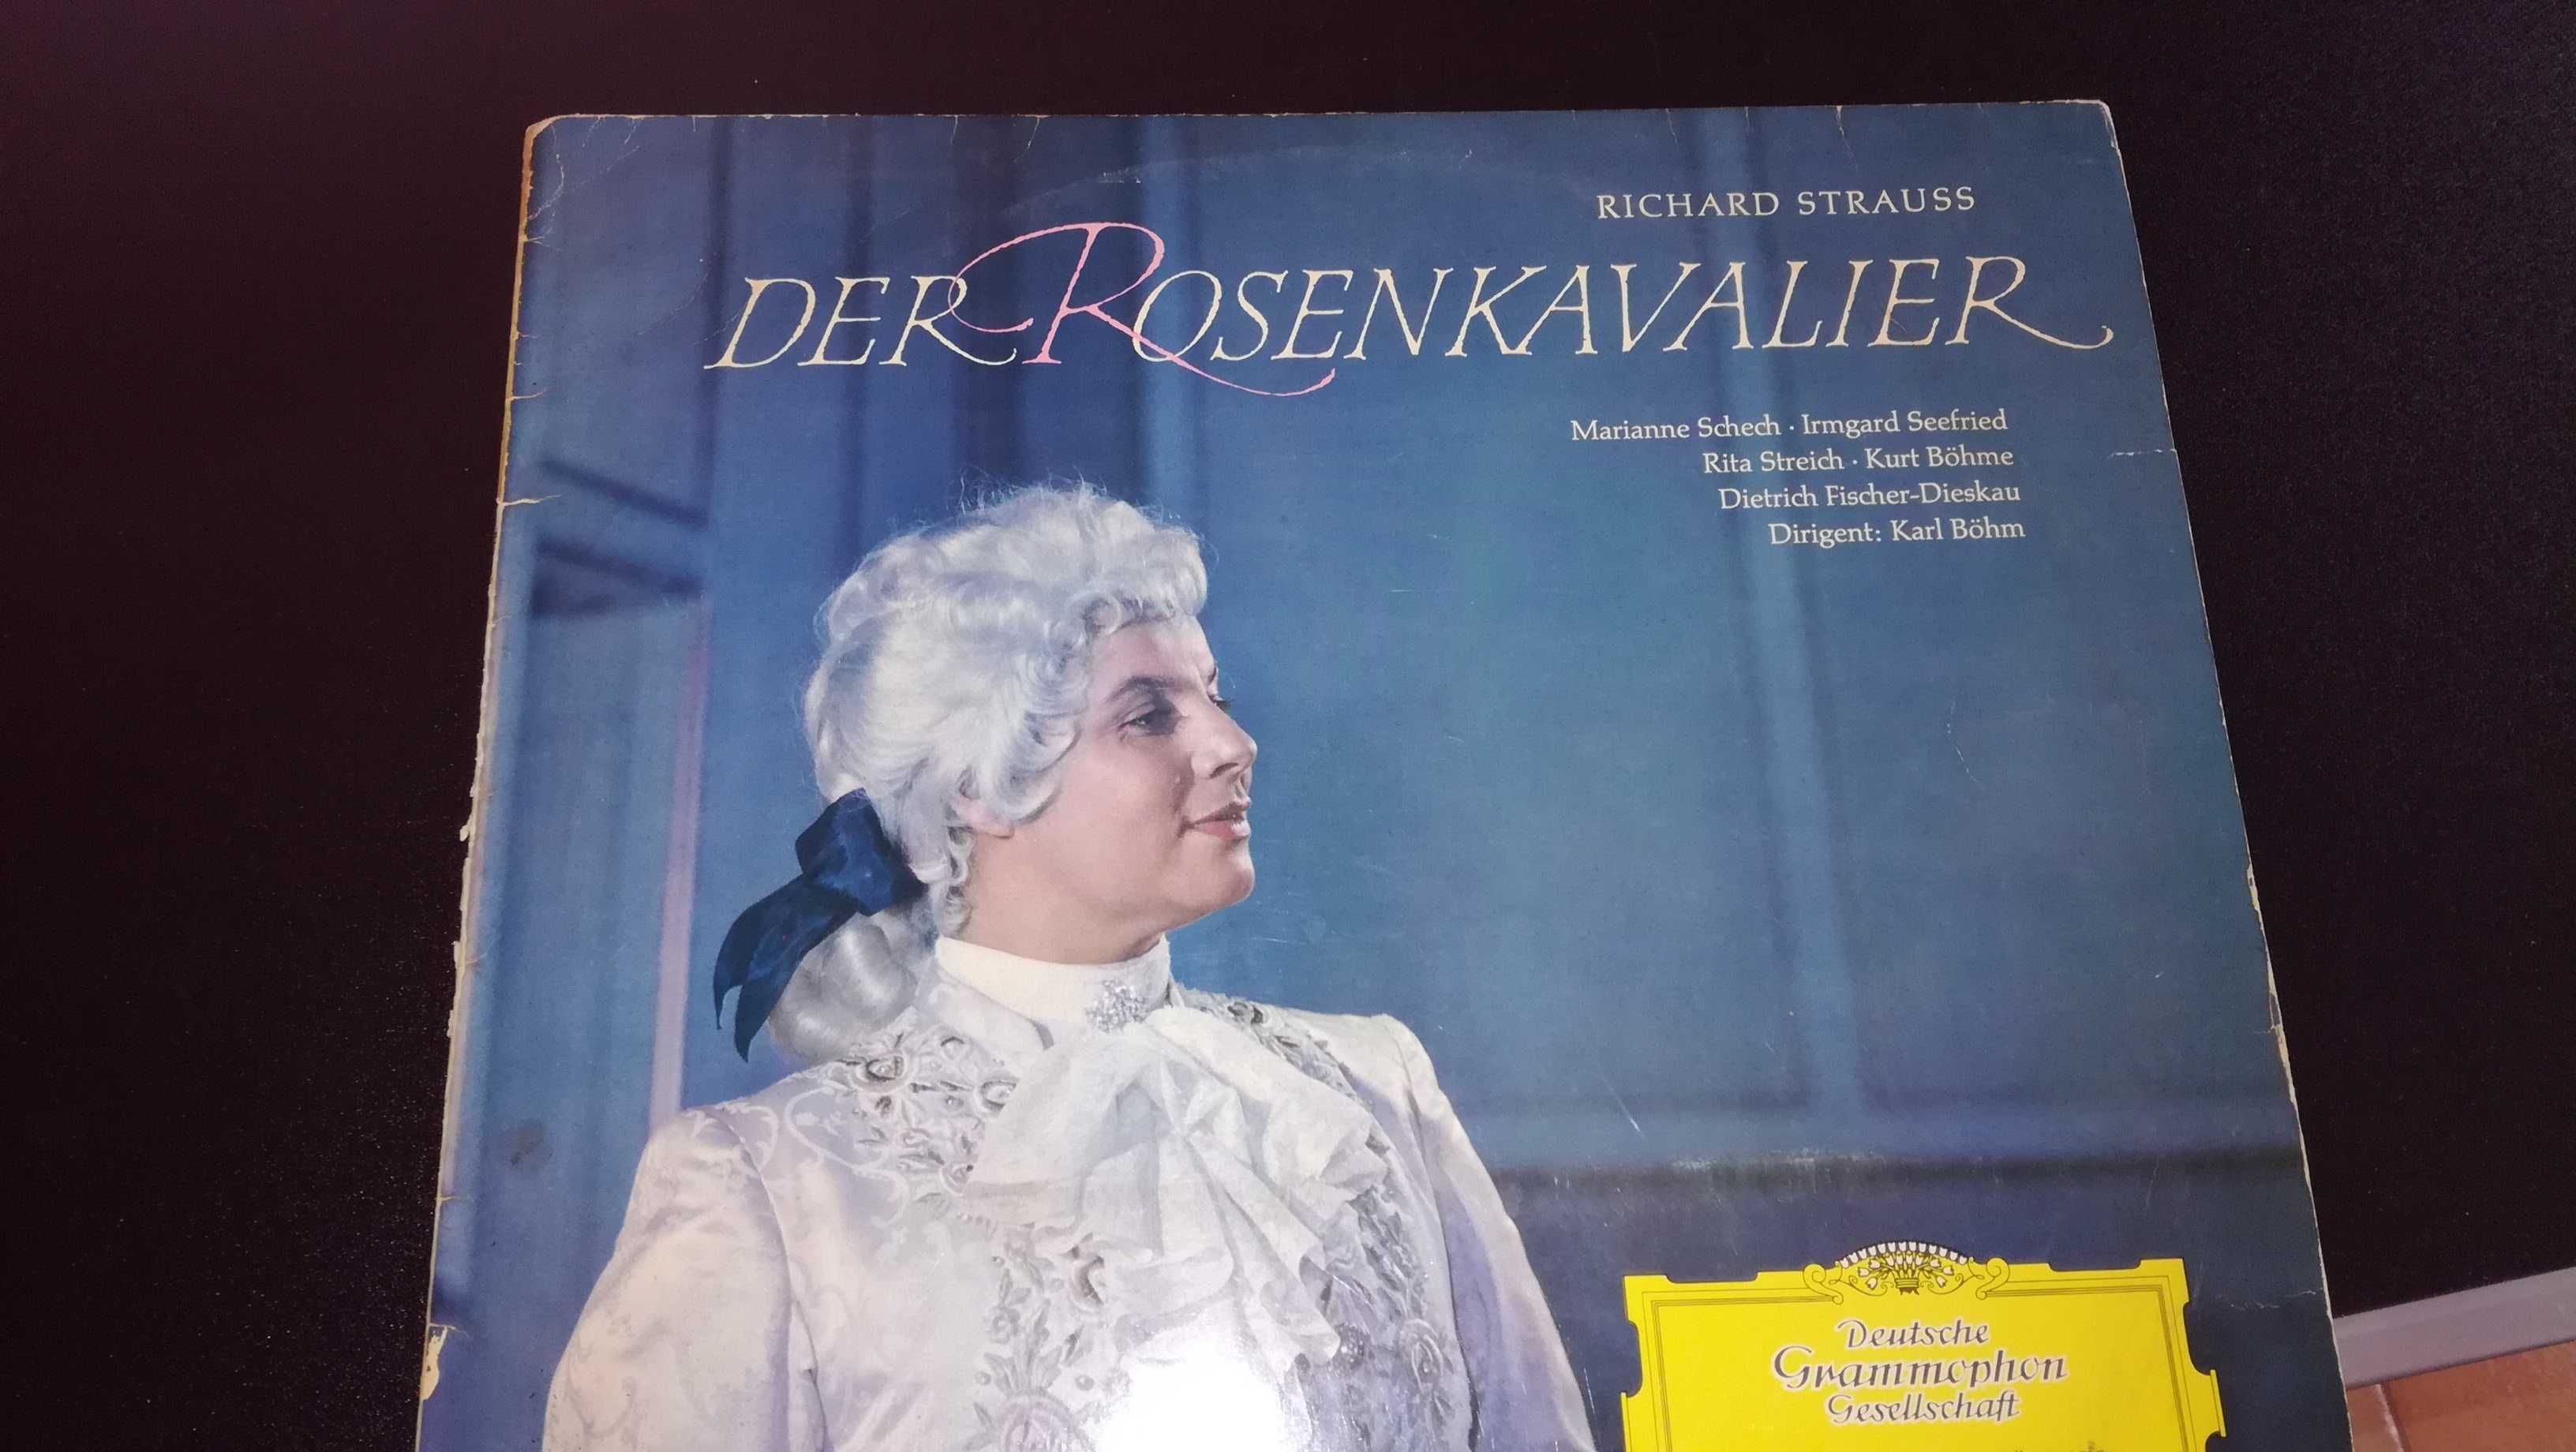 Vinil/vinyl - Clasica -  Schubert, Schumann, Smetana,Schutz - Lista